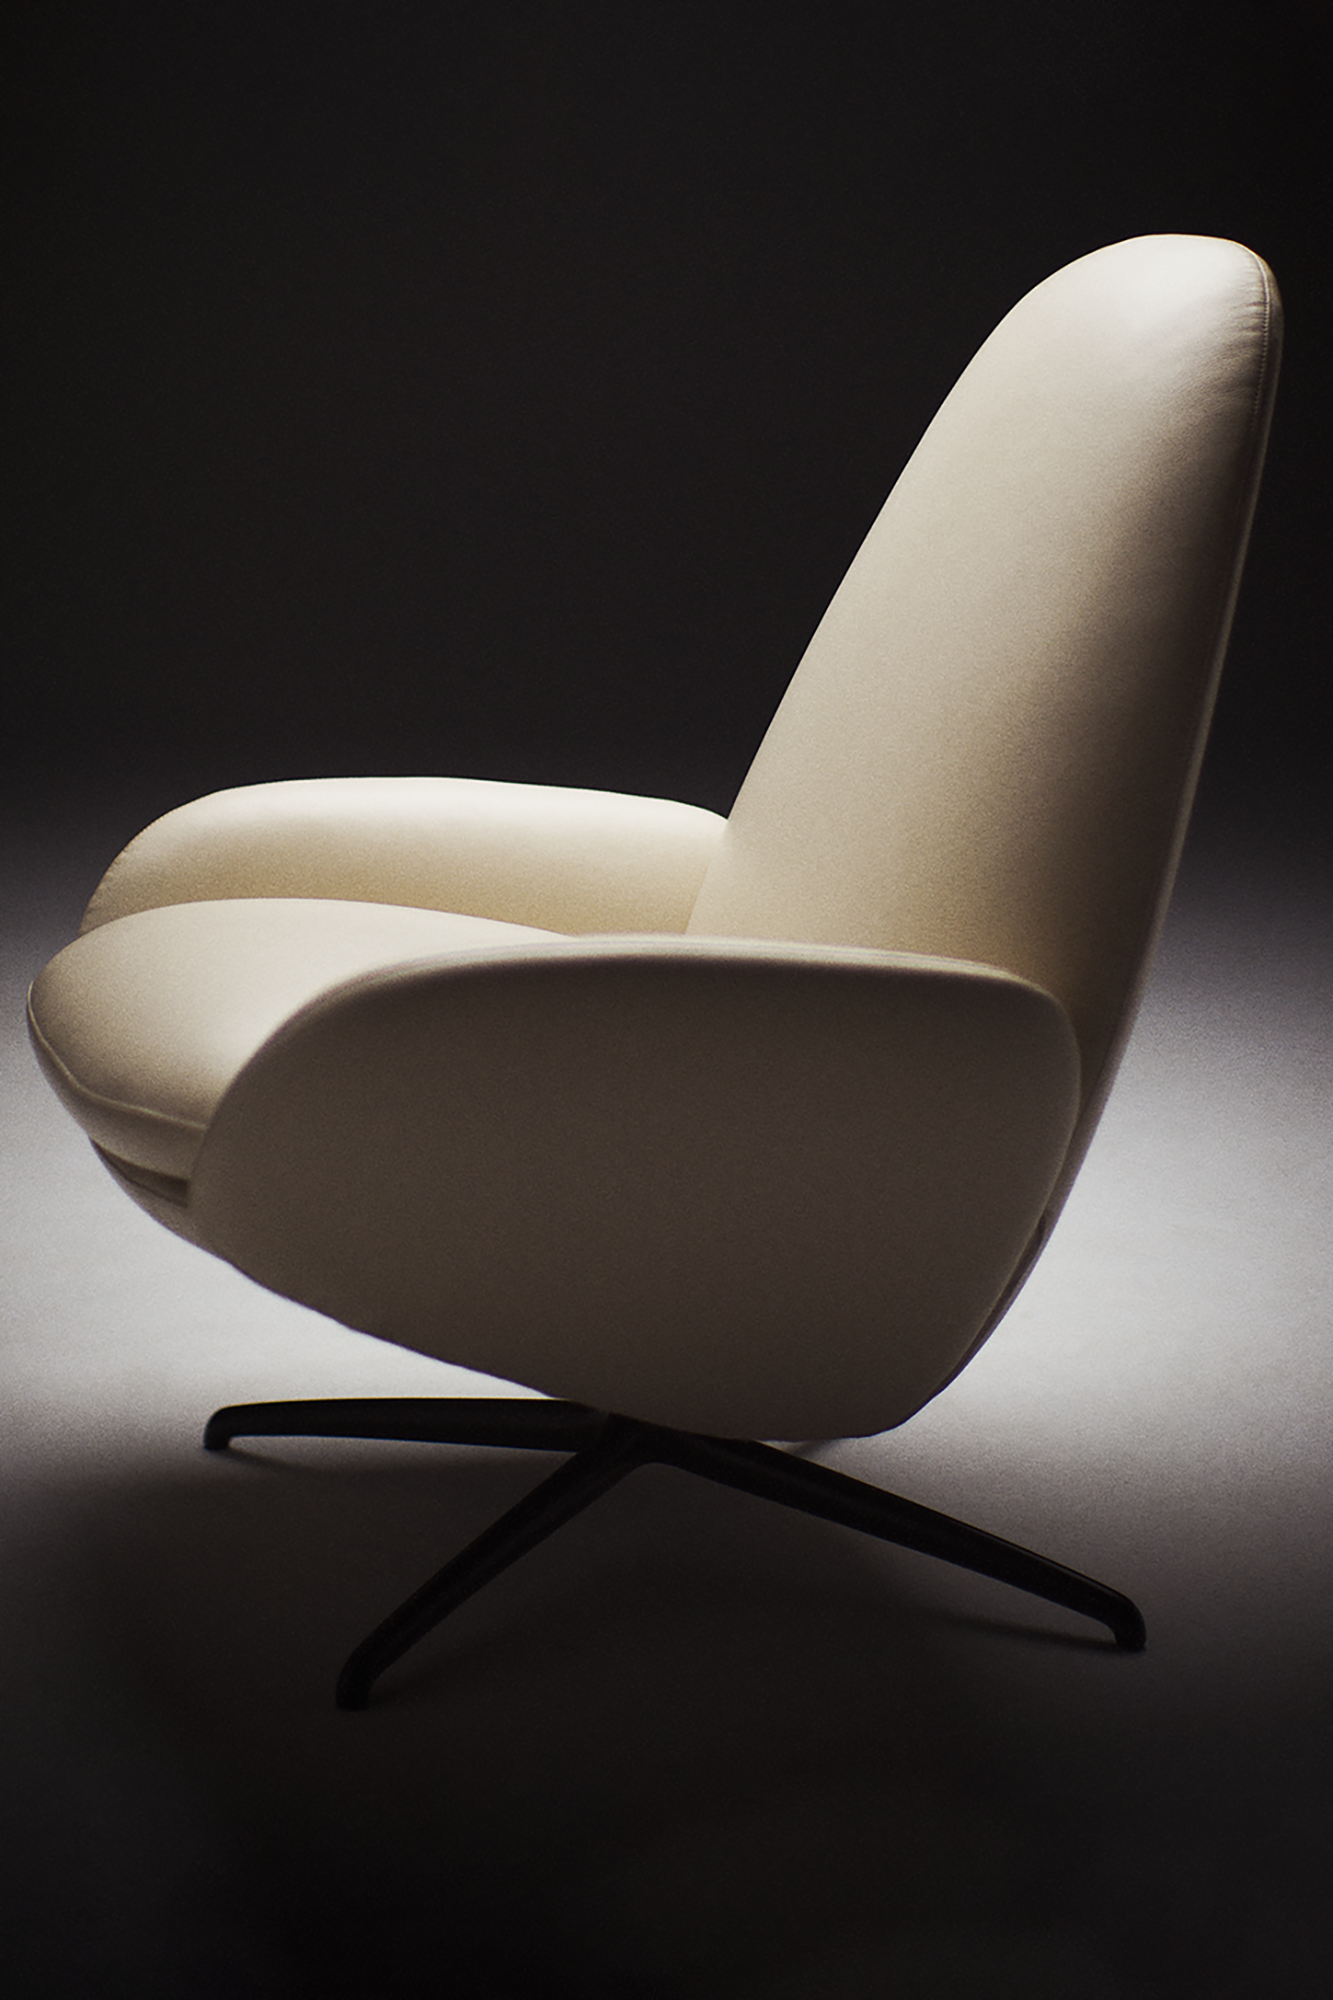 Atlason Studio - Vala swivel chair for Design Within Reach